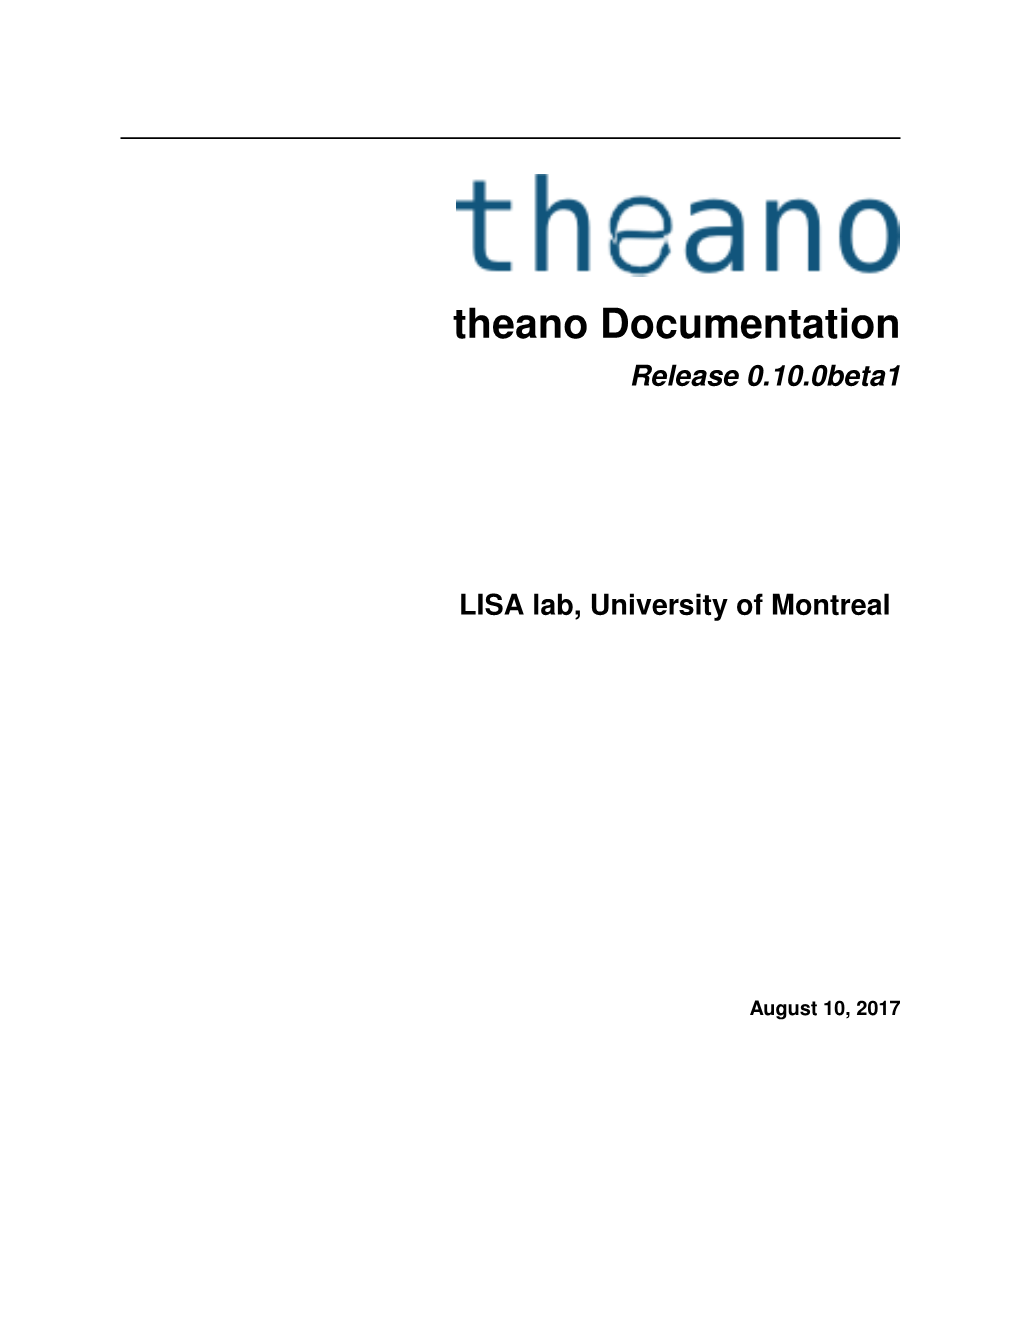 Theano Documentation Release 0.10.0Beta1